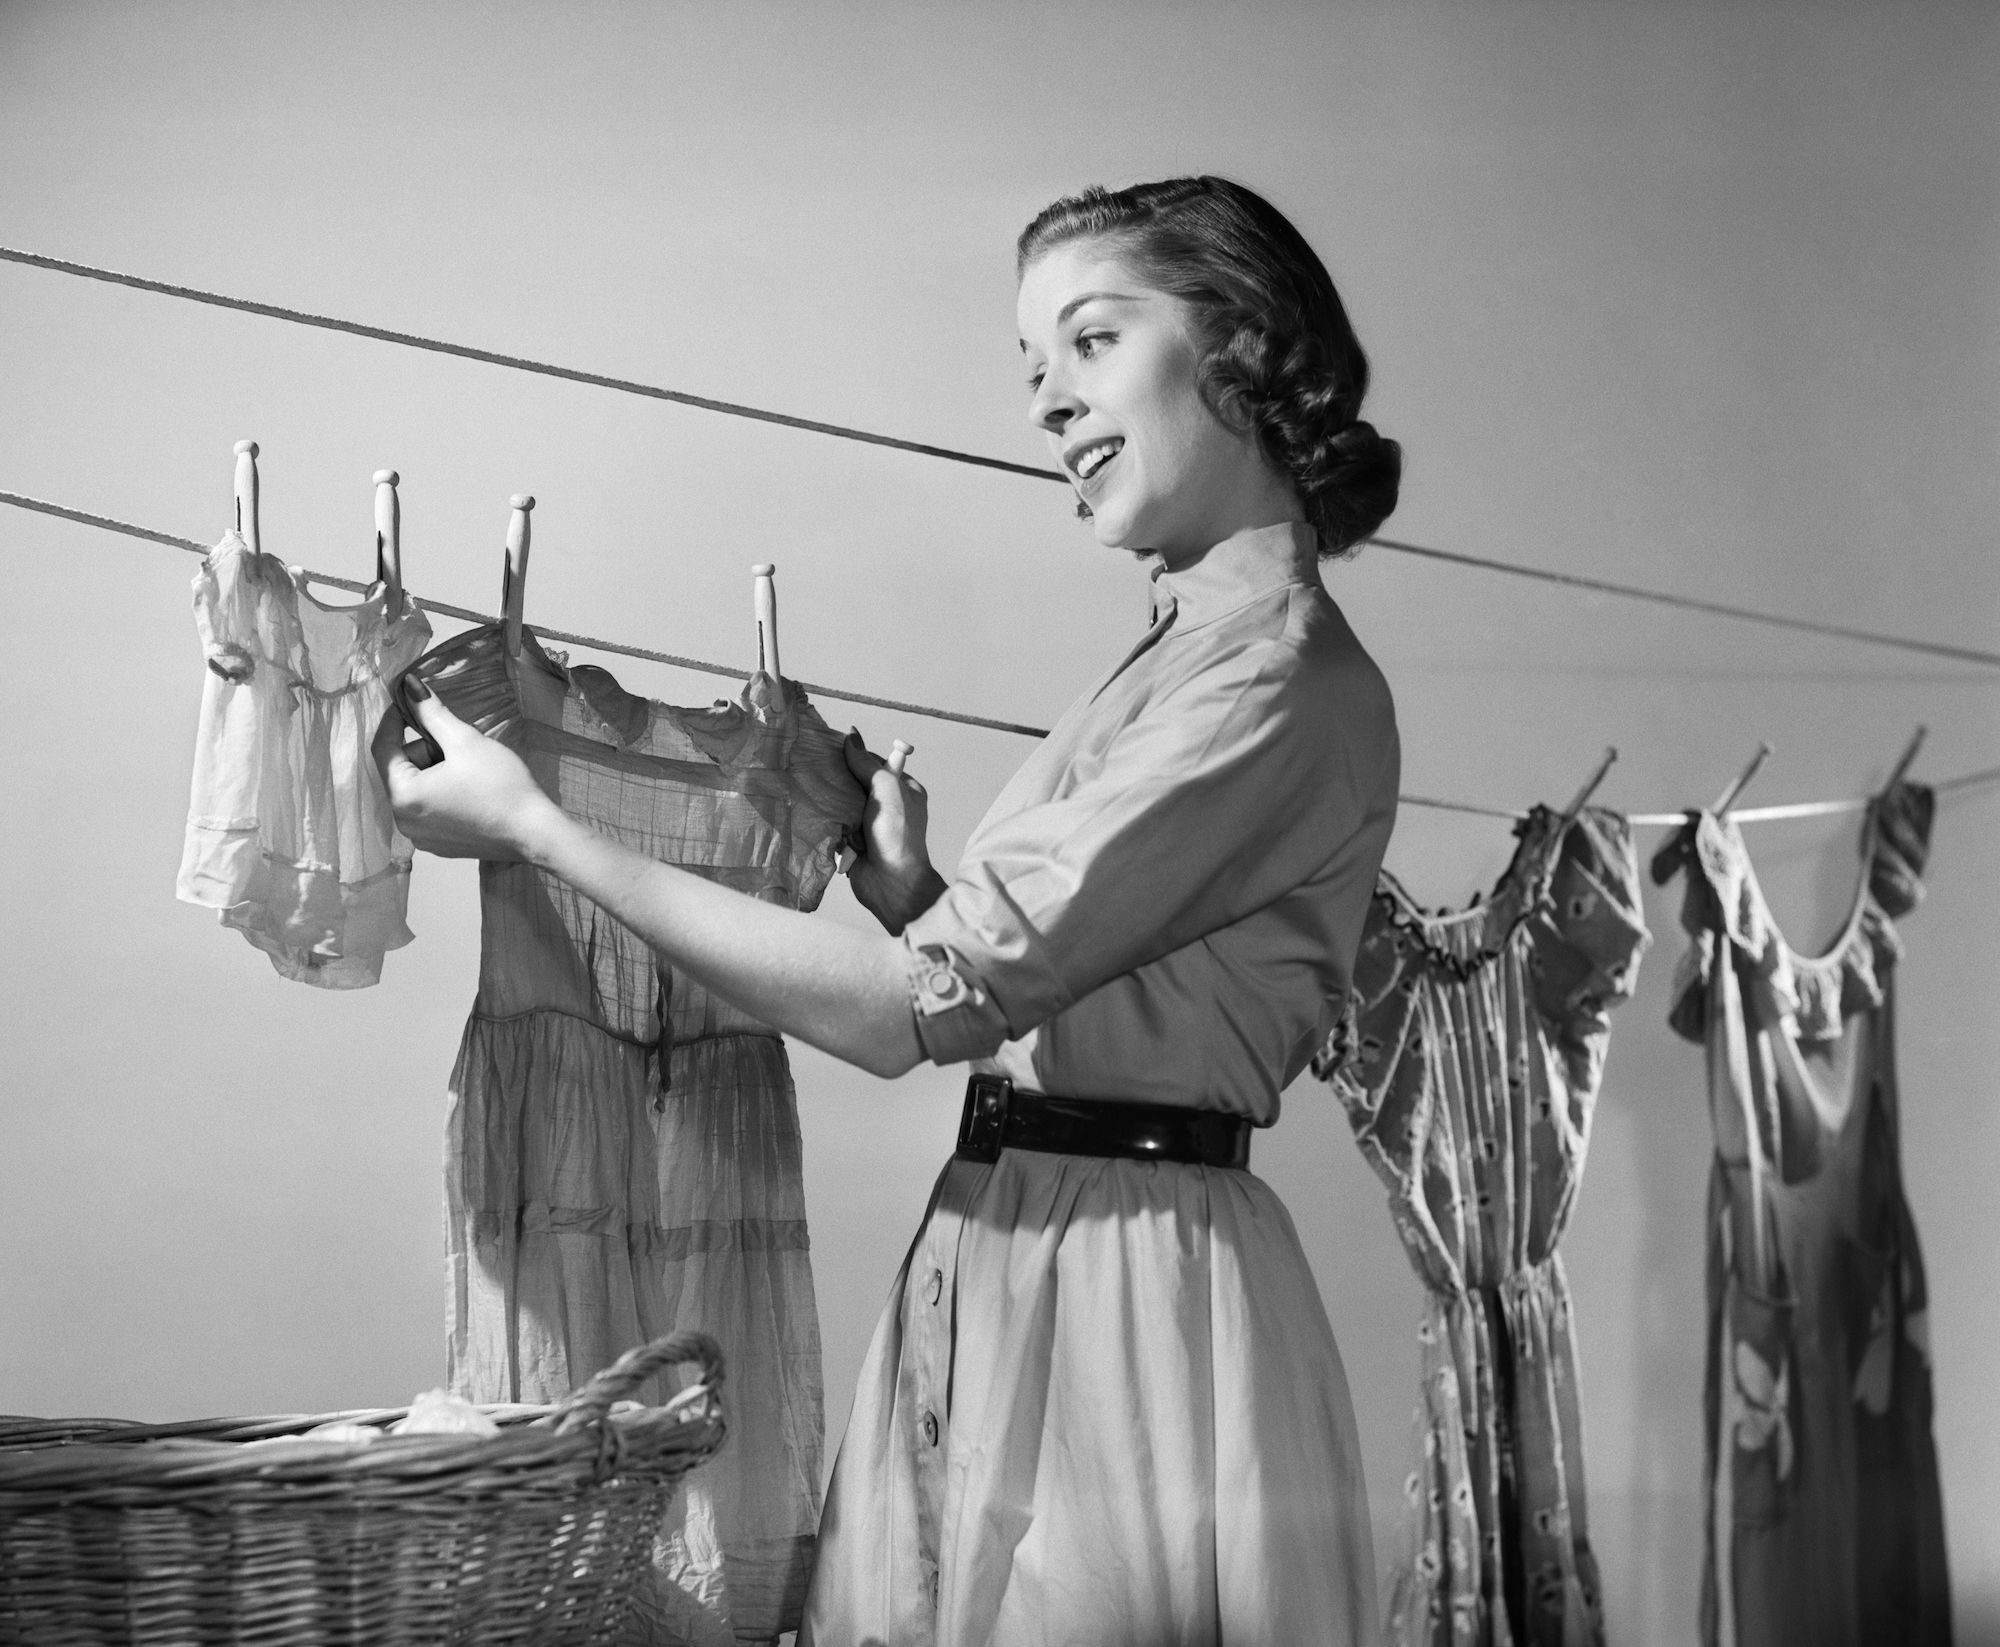 https://media.cnn.com/api/v1/images/stellar/prod/221223144703-03-housewife-1950s-restricted.jpg?c=original